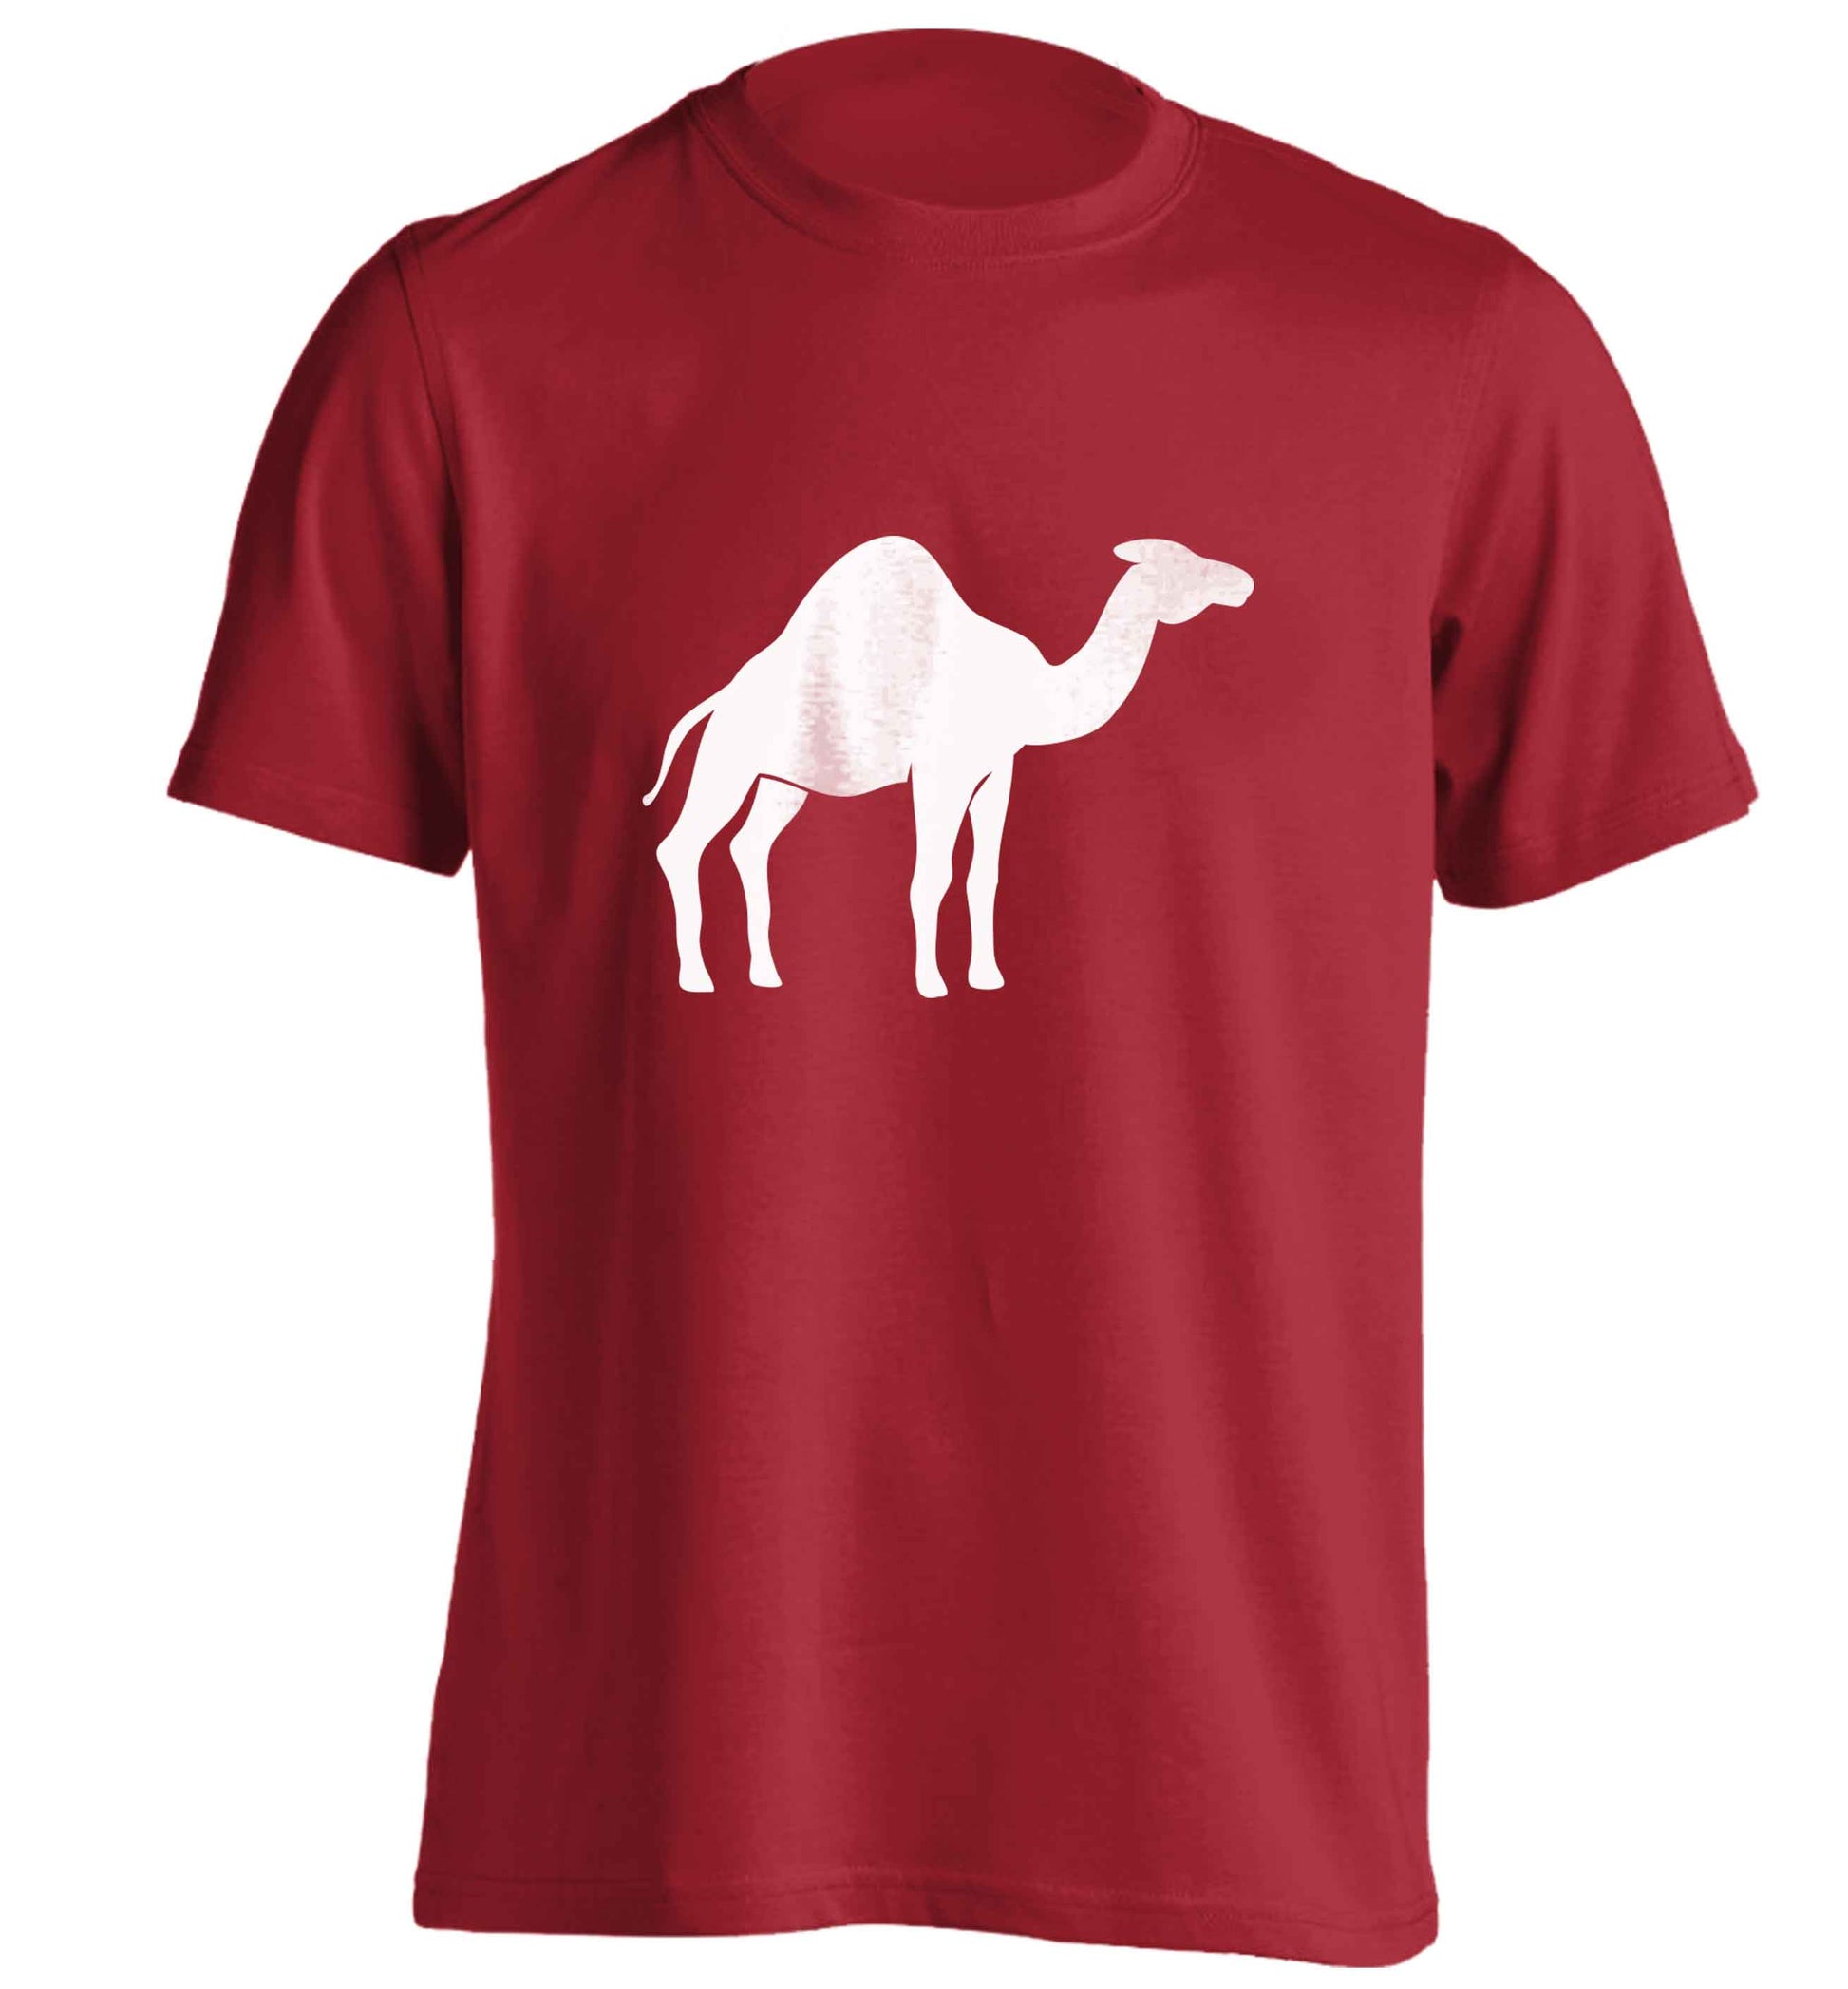 Blue camel adults unisex red Tshirt 2XL